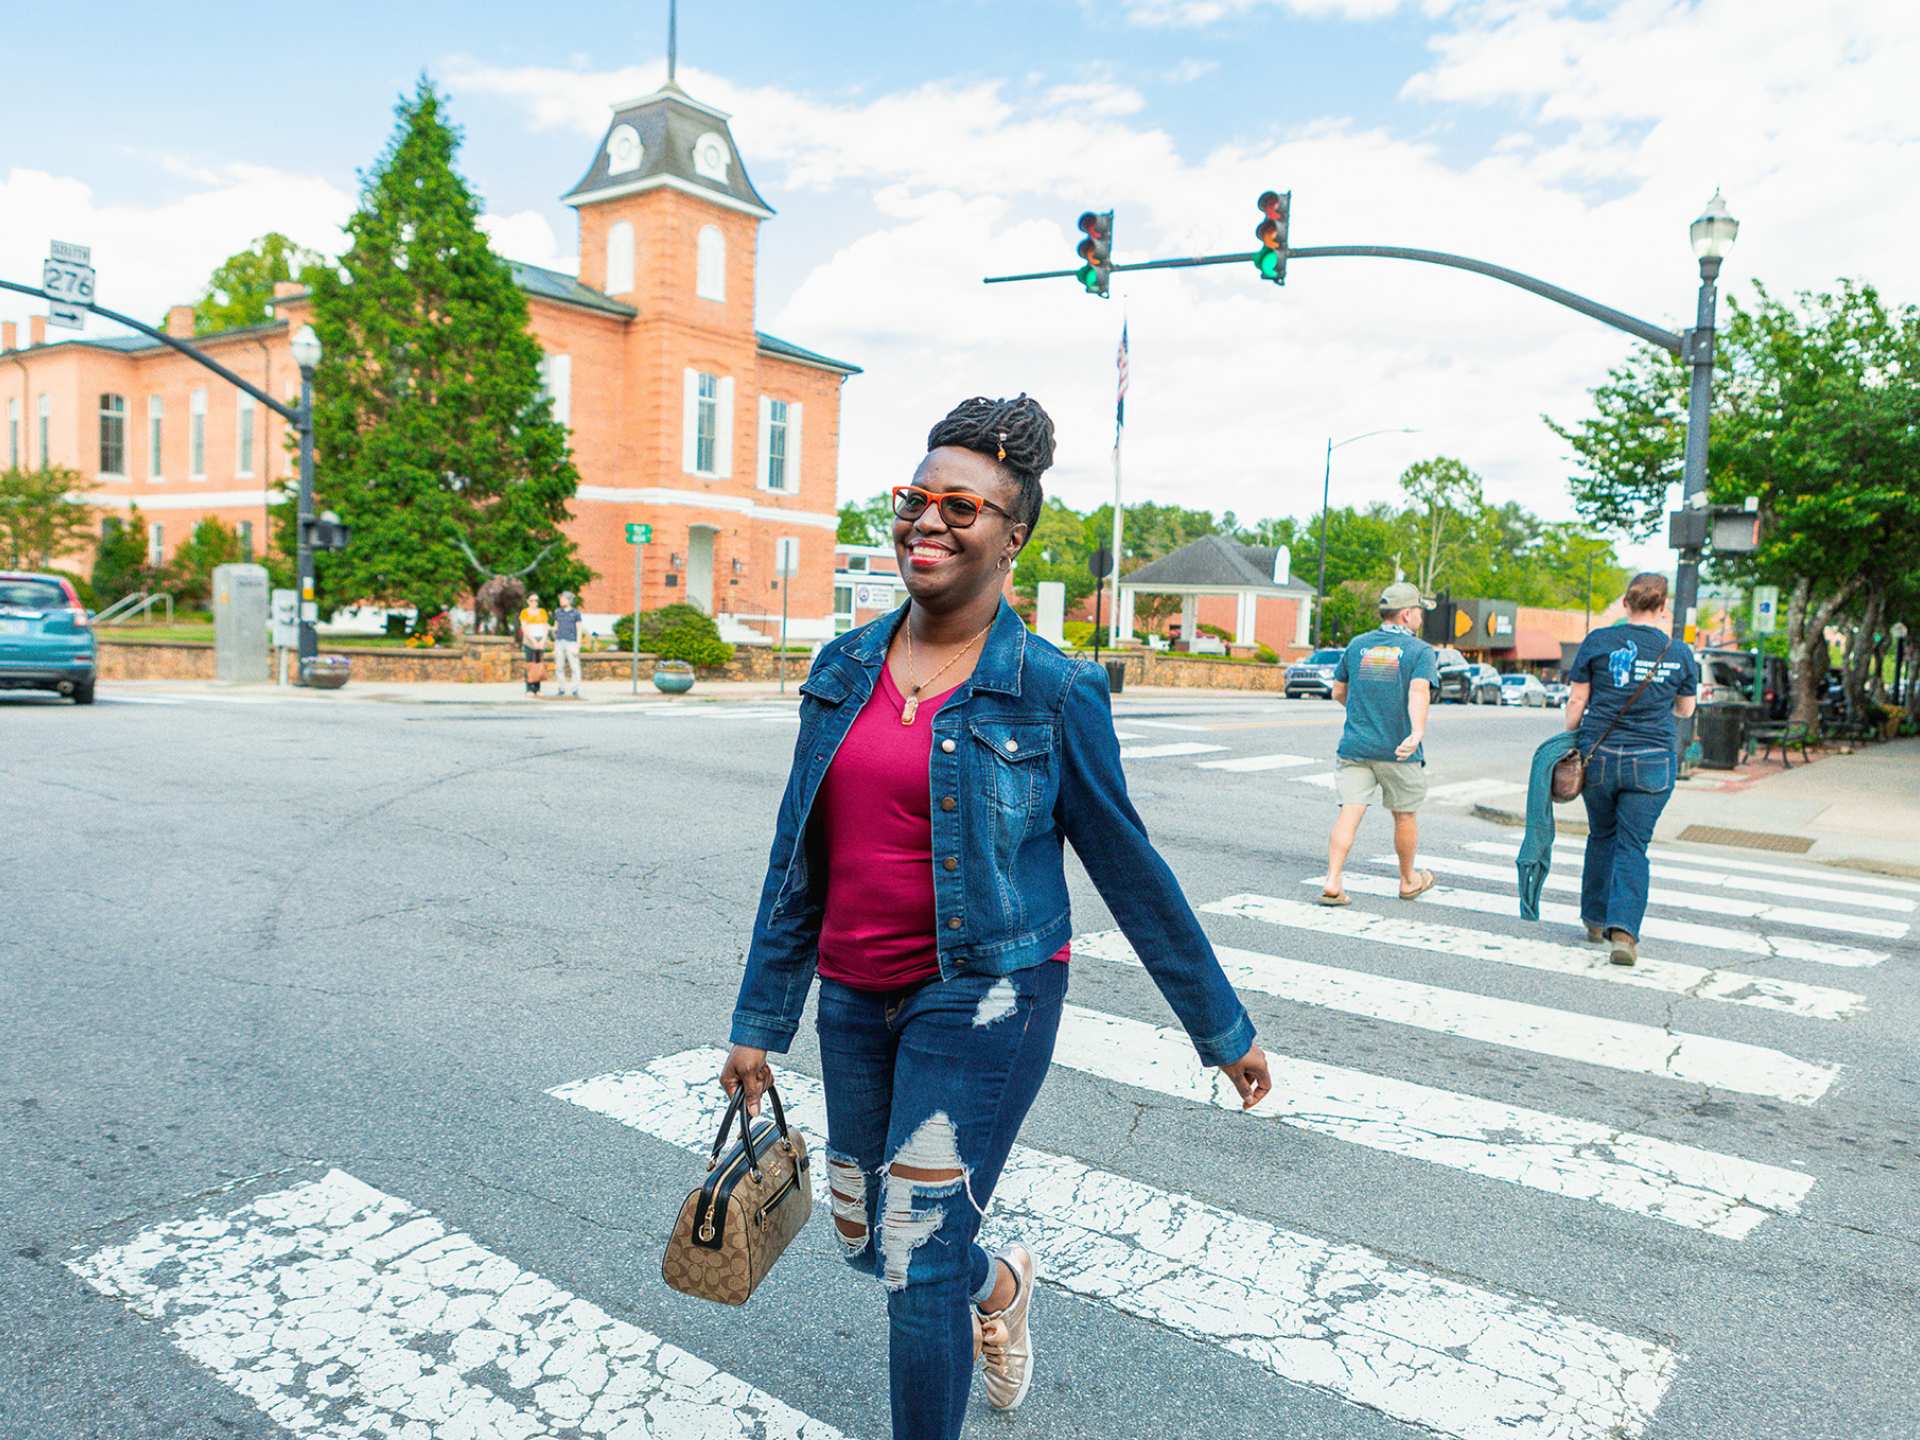 North Carolina | A woman walking across the street and smiling in Brevard, North Carolina